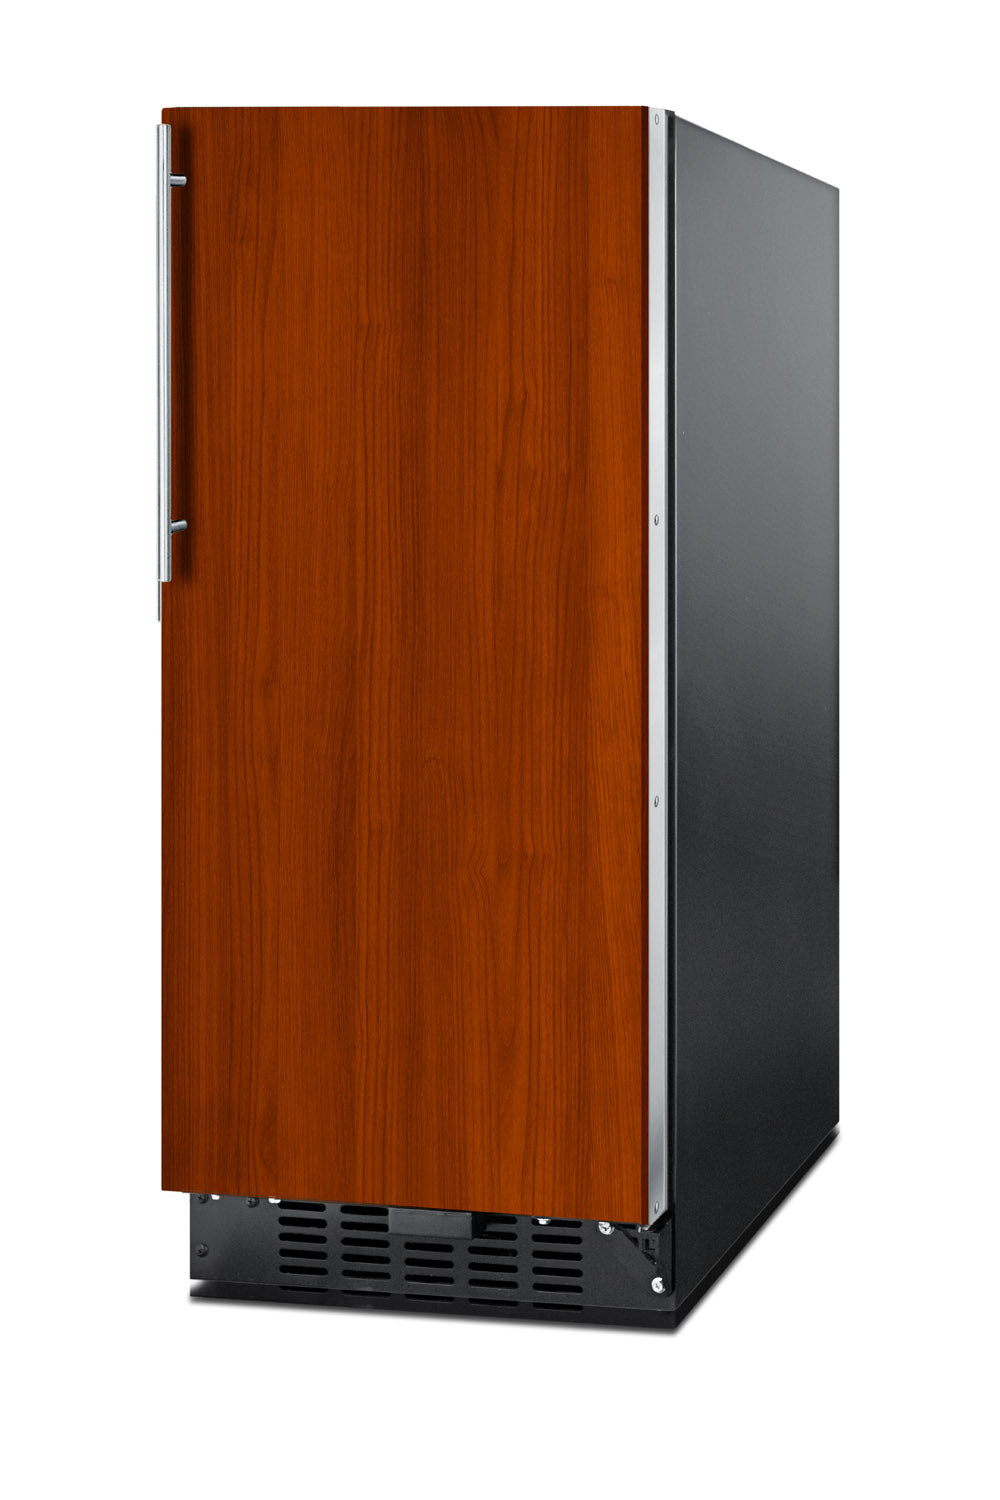 SUMMIT 15" Wide Built-In All-Refrigerator, ADA Compliant